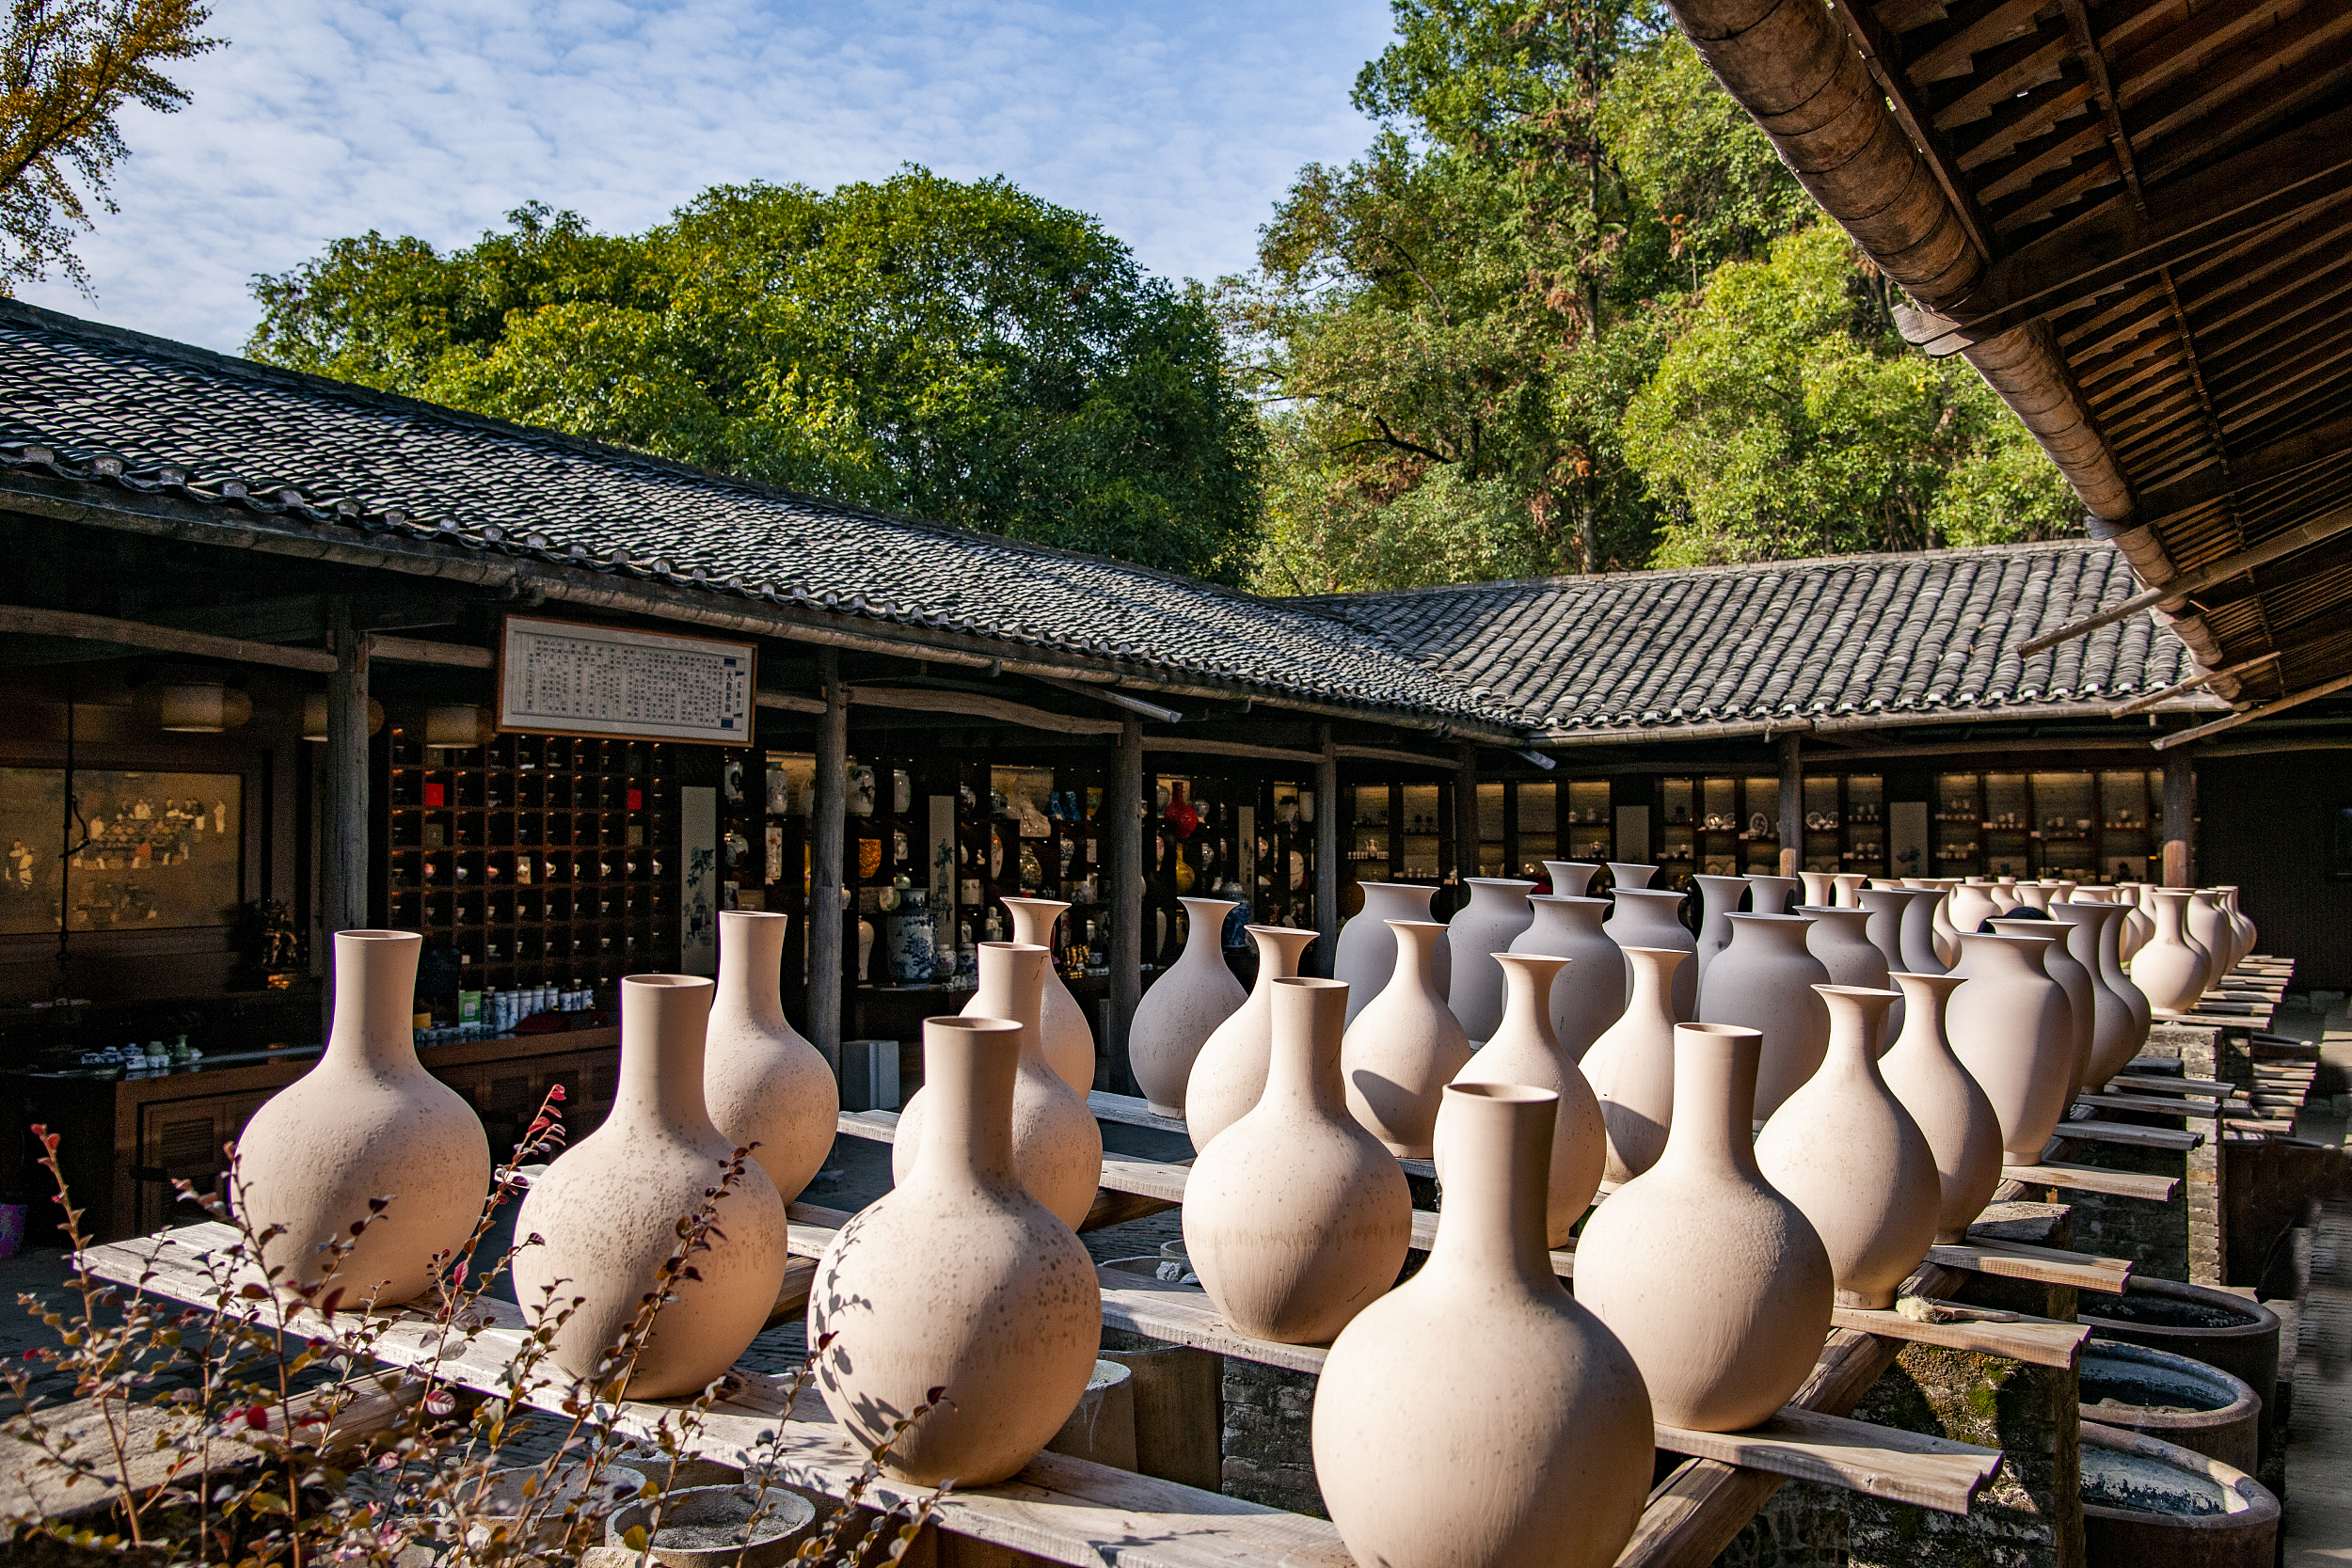 Home of China's Porcelain - Jingdezhen | Expats Holidays